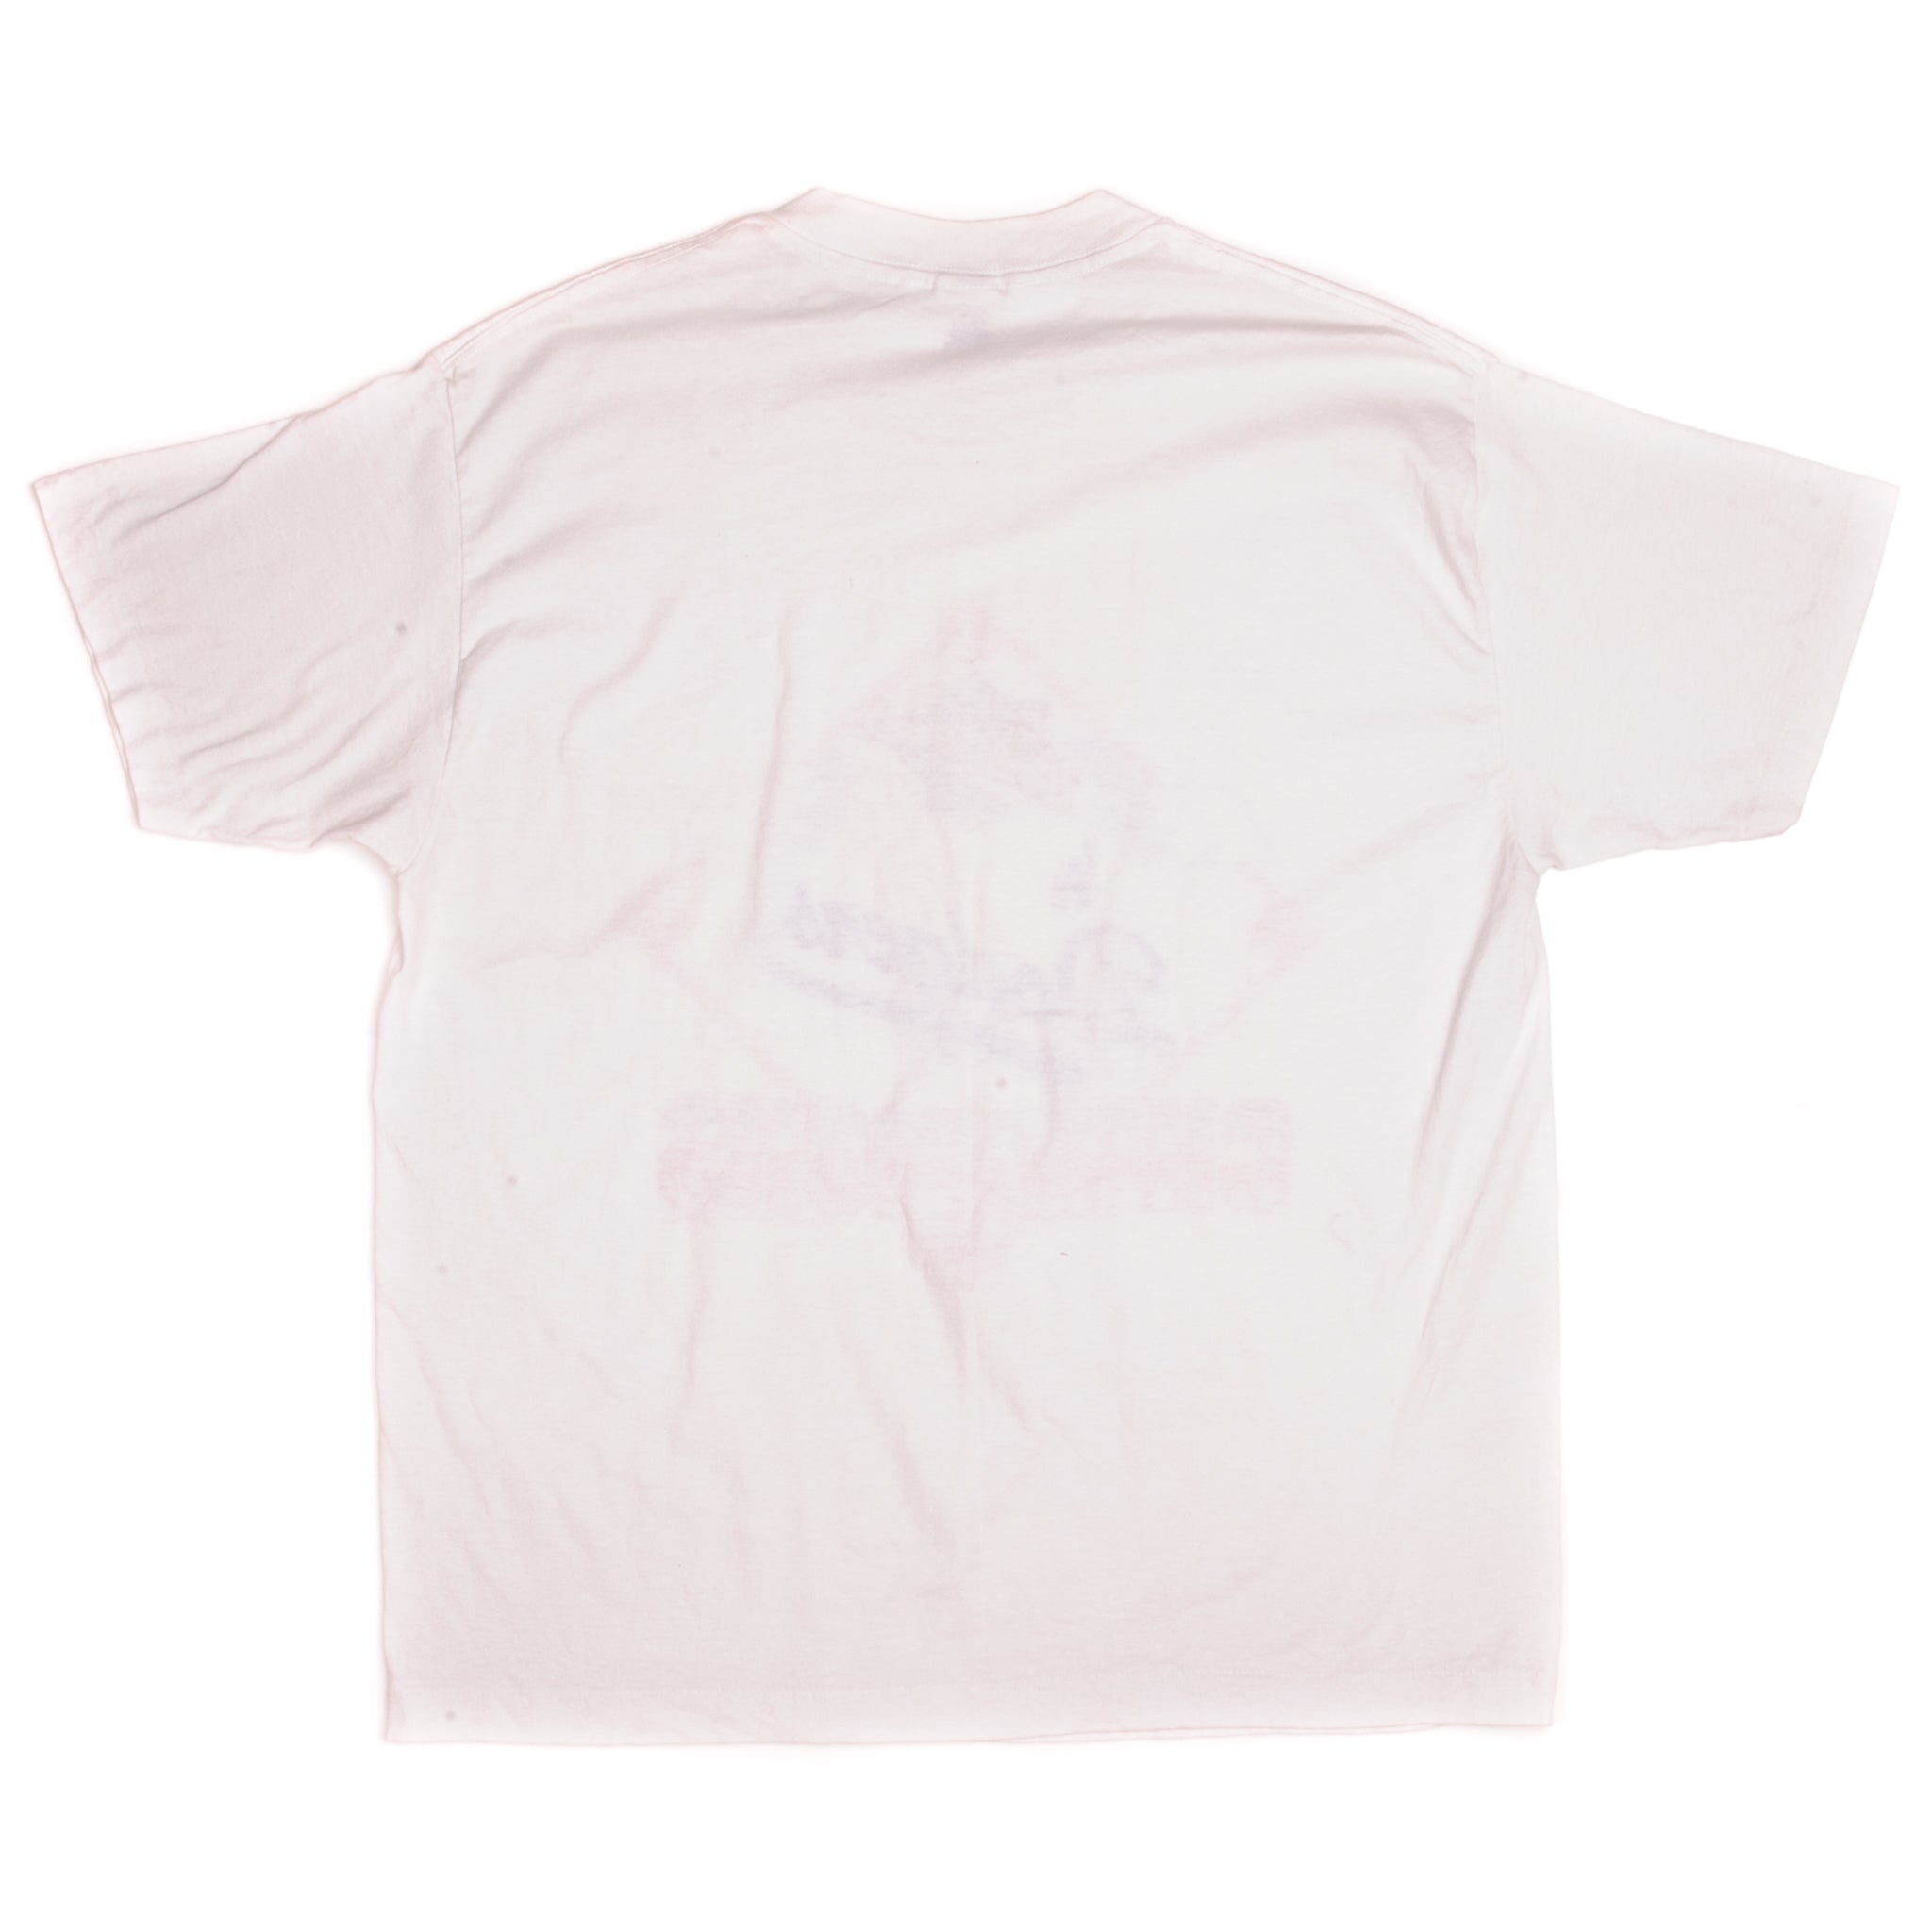 Dodgers Grandma shirt size XL 25$  Grandma shirts, Shirts, Shirt size